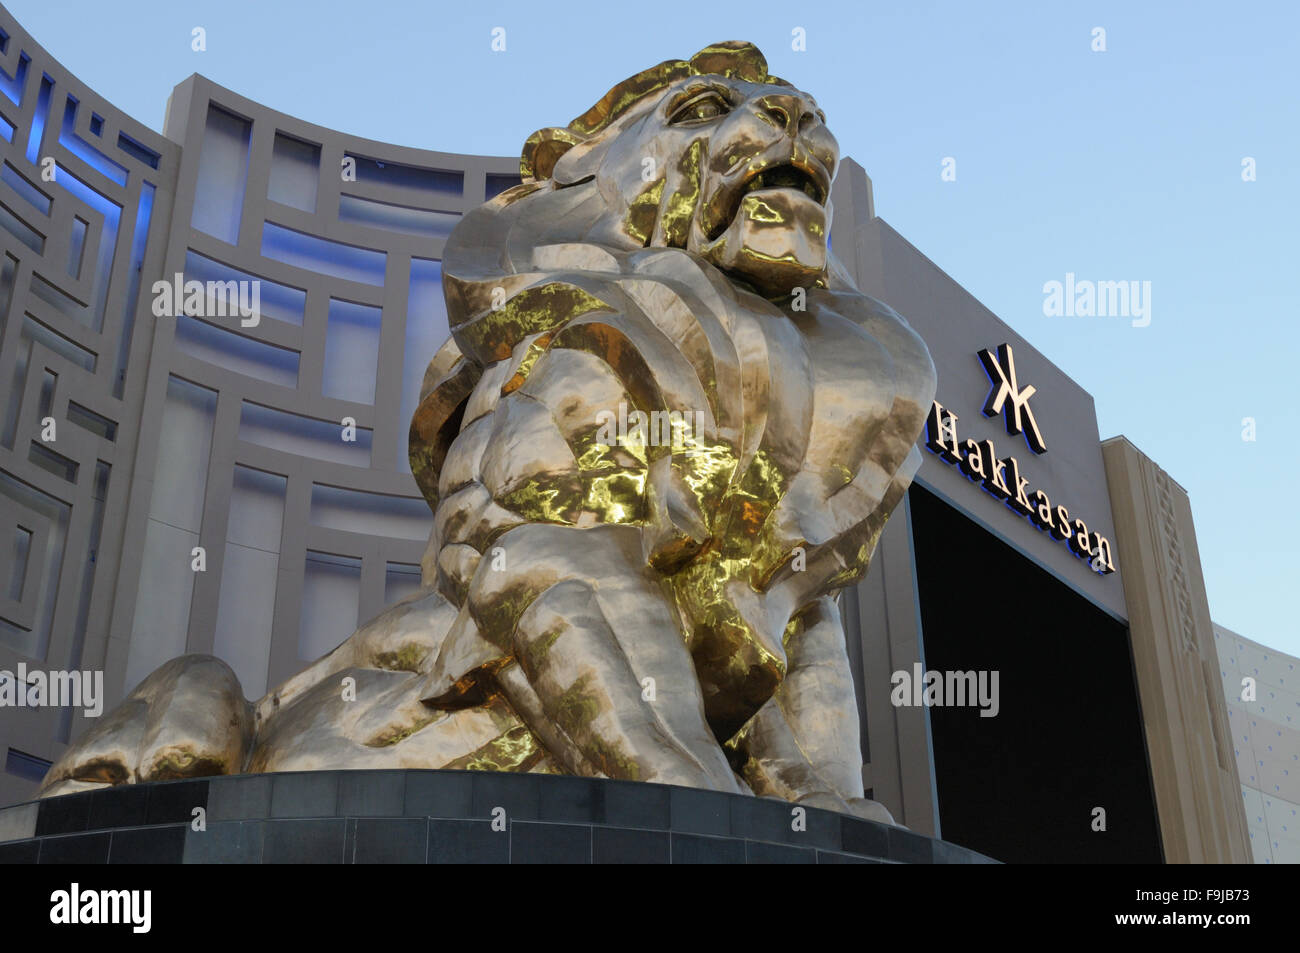 MGM Grand Lion, MGM Grand Hotel, Hakkasan Nightclub. Stock Photo